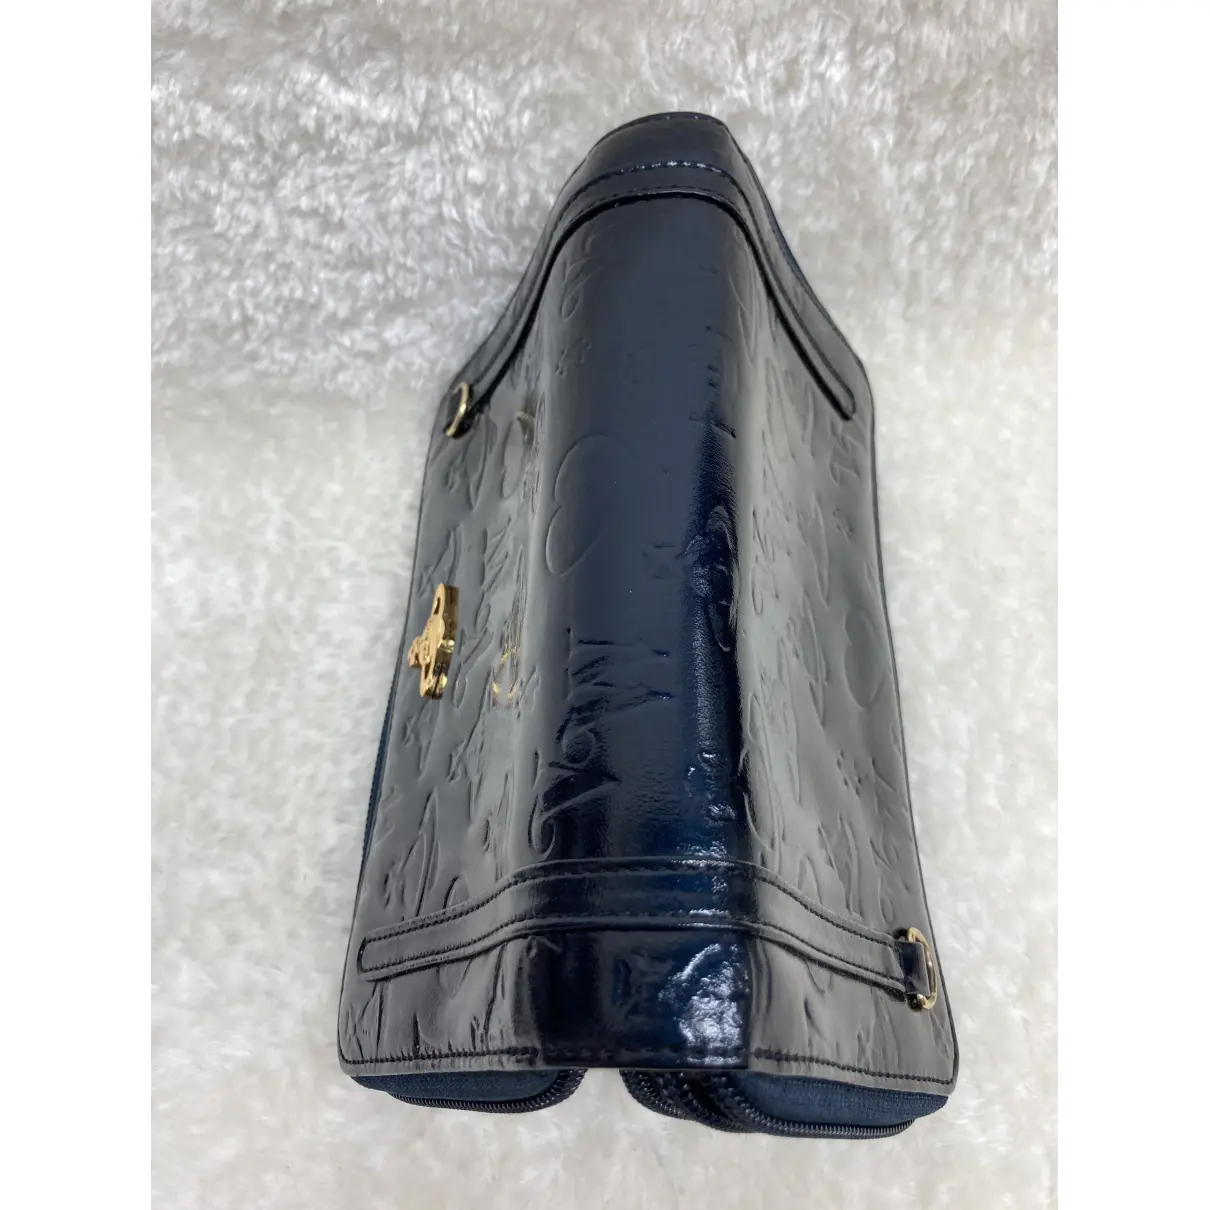 Buy Vivienne Westwood Patent leather crossbody bag online